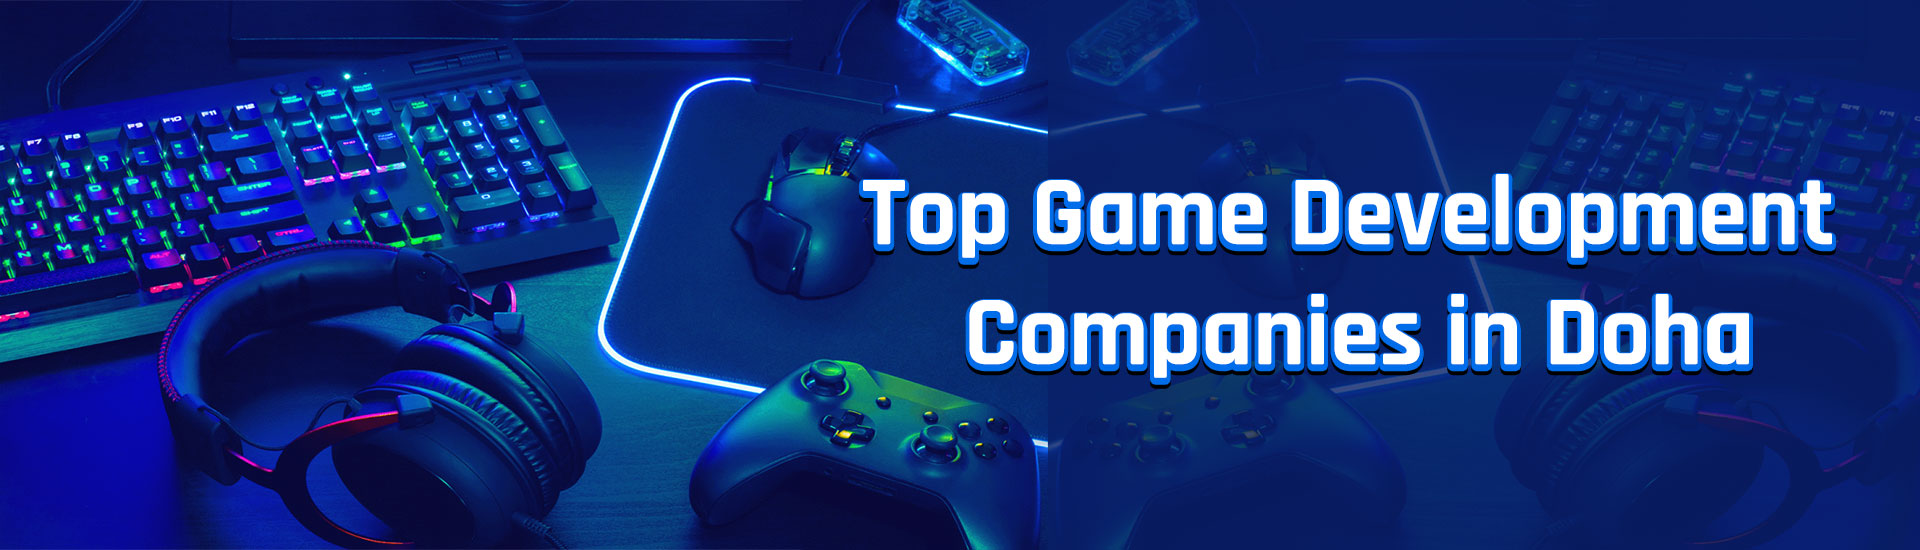 Top Game Development Companies in Doha